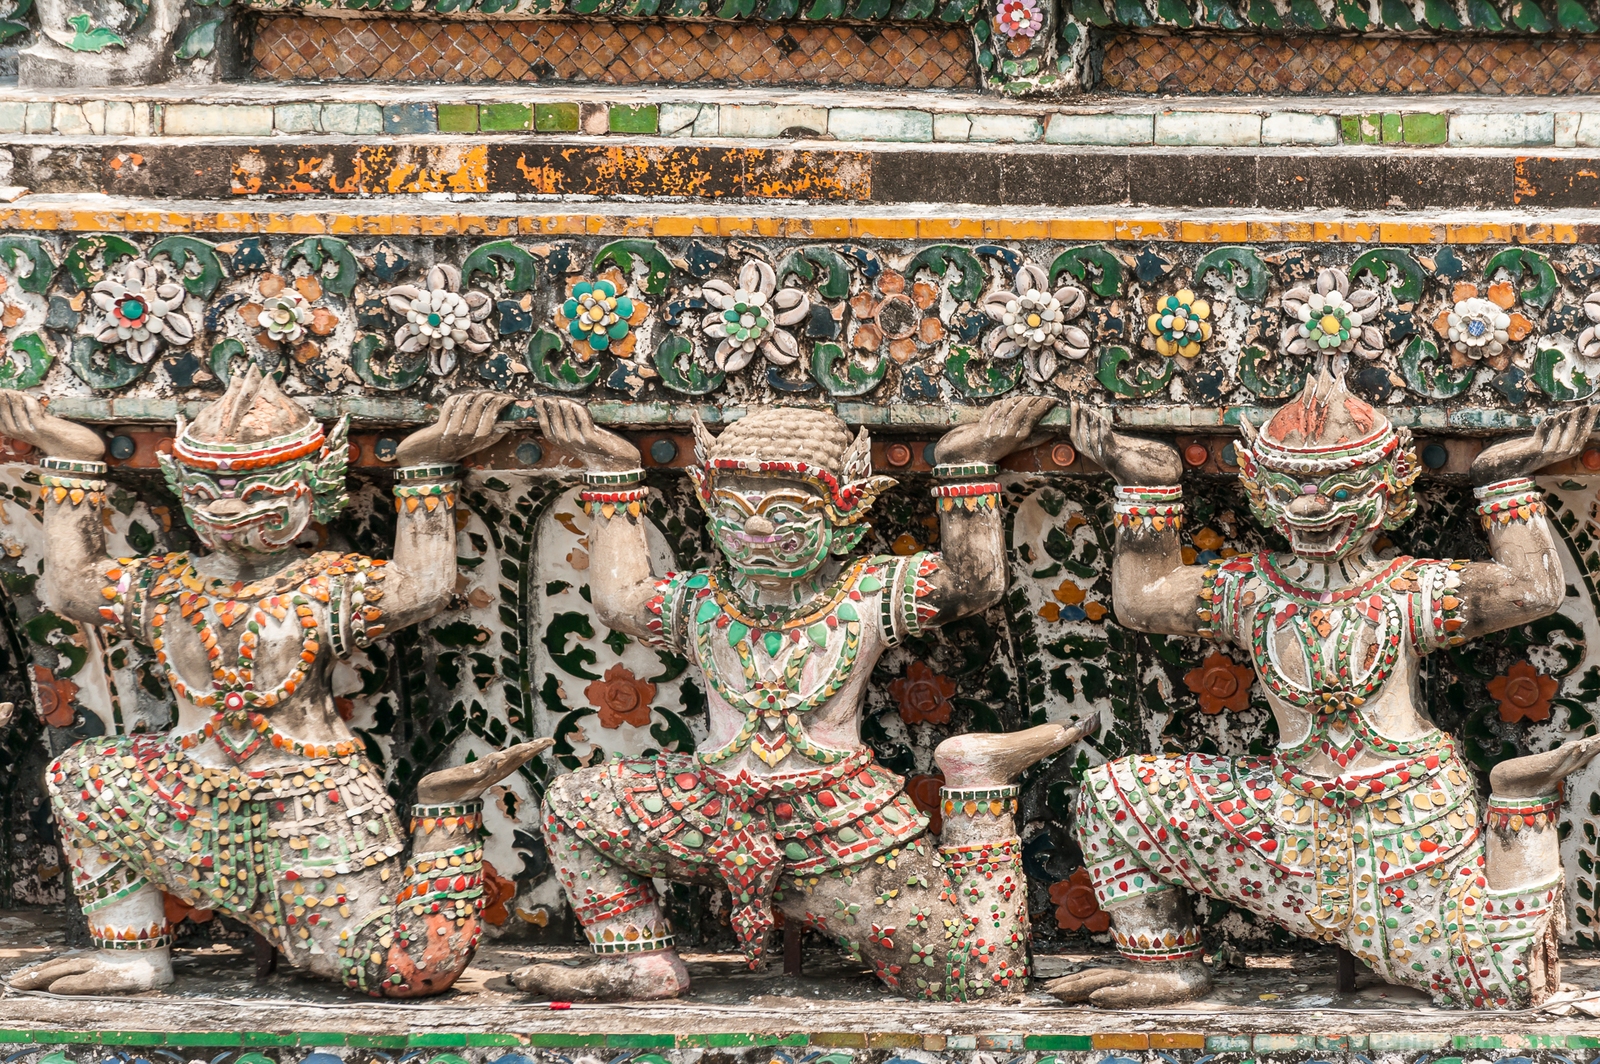 Image of Wat Arun by Sue Wolfe